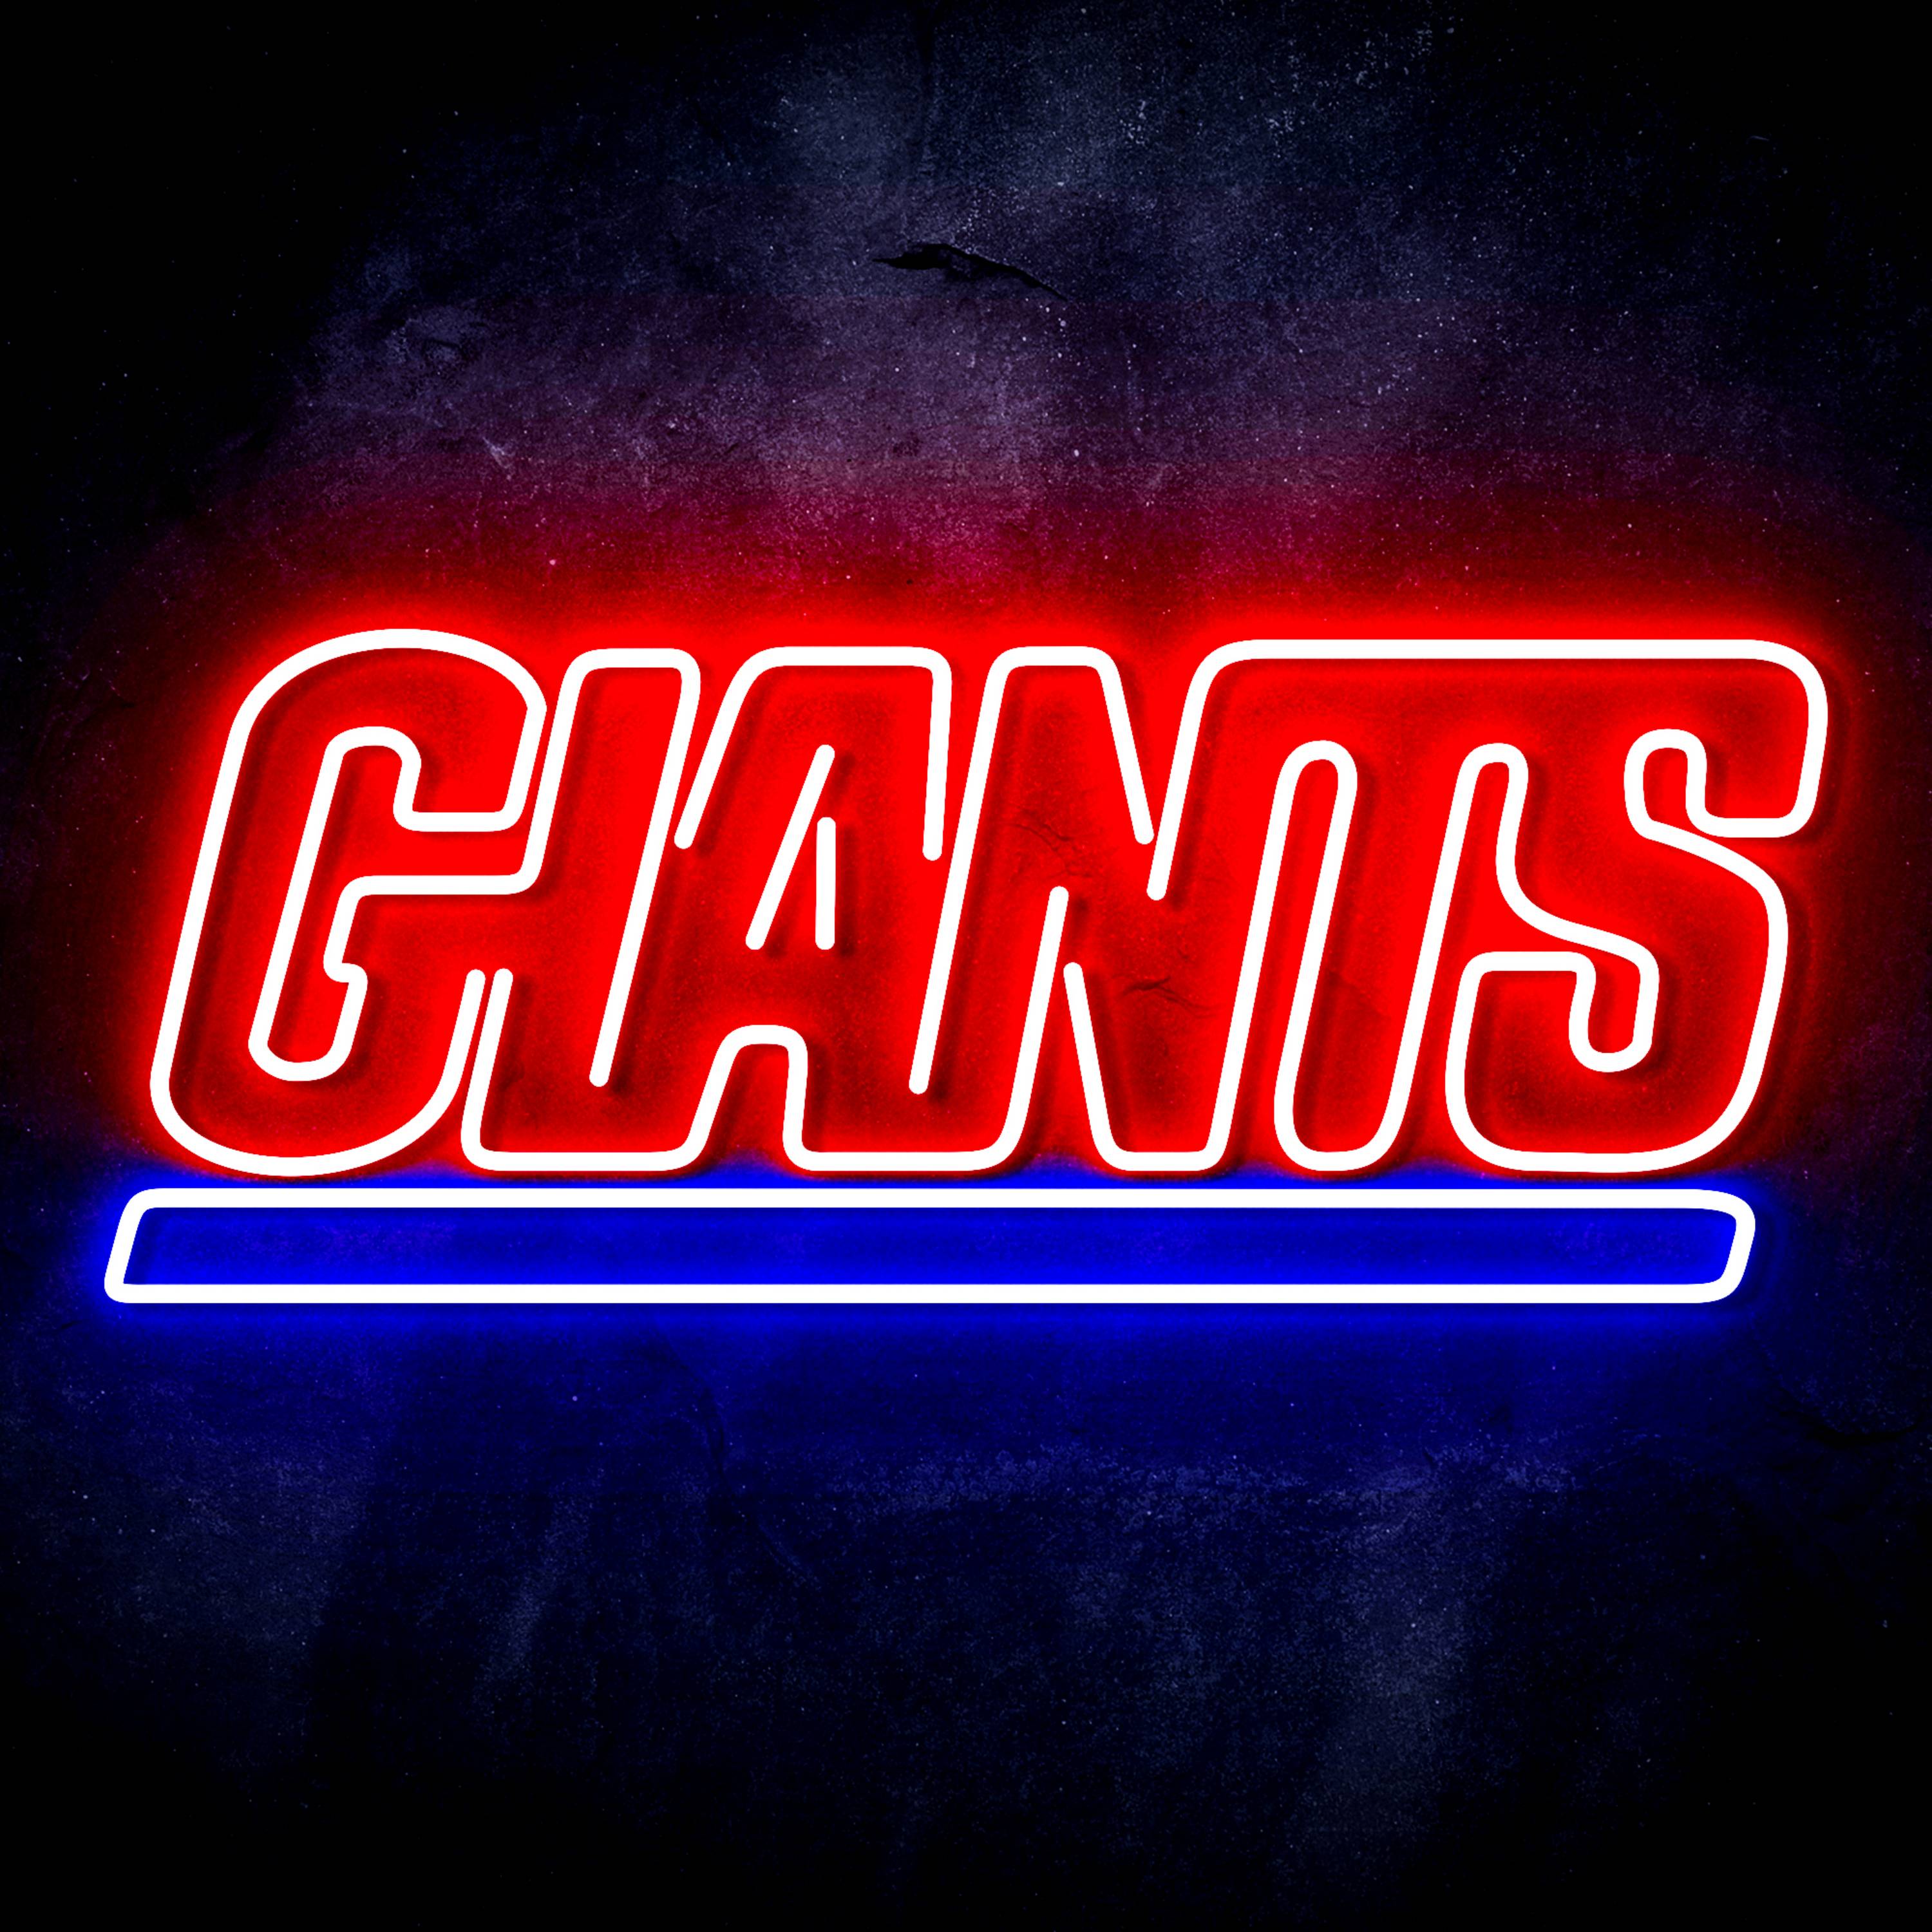 NFL GIANTS LED Neon Sign